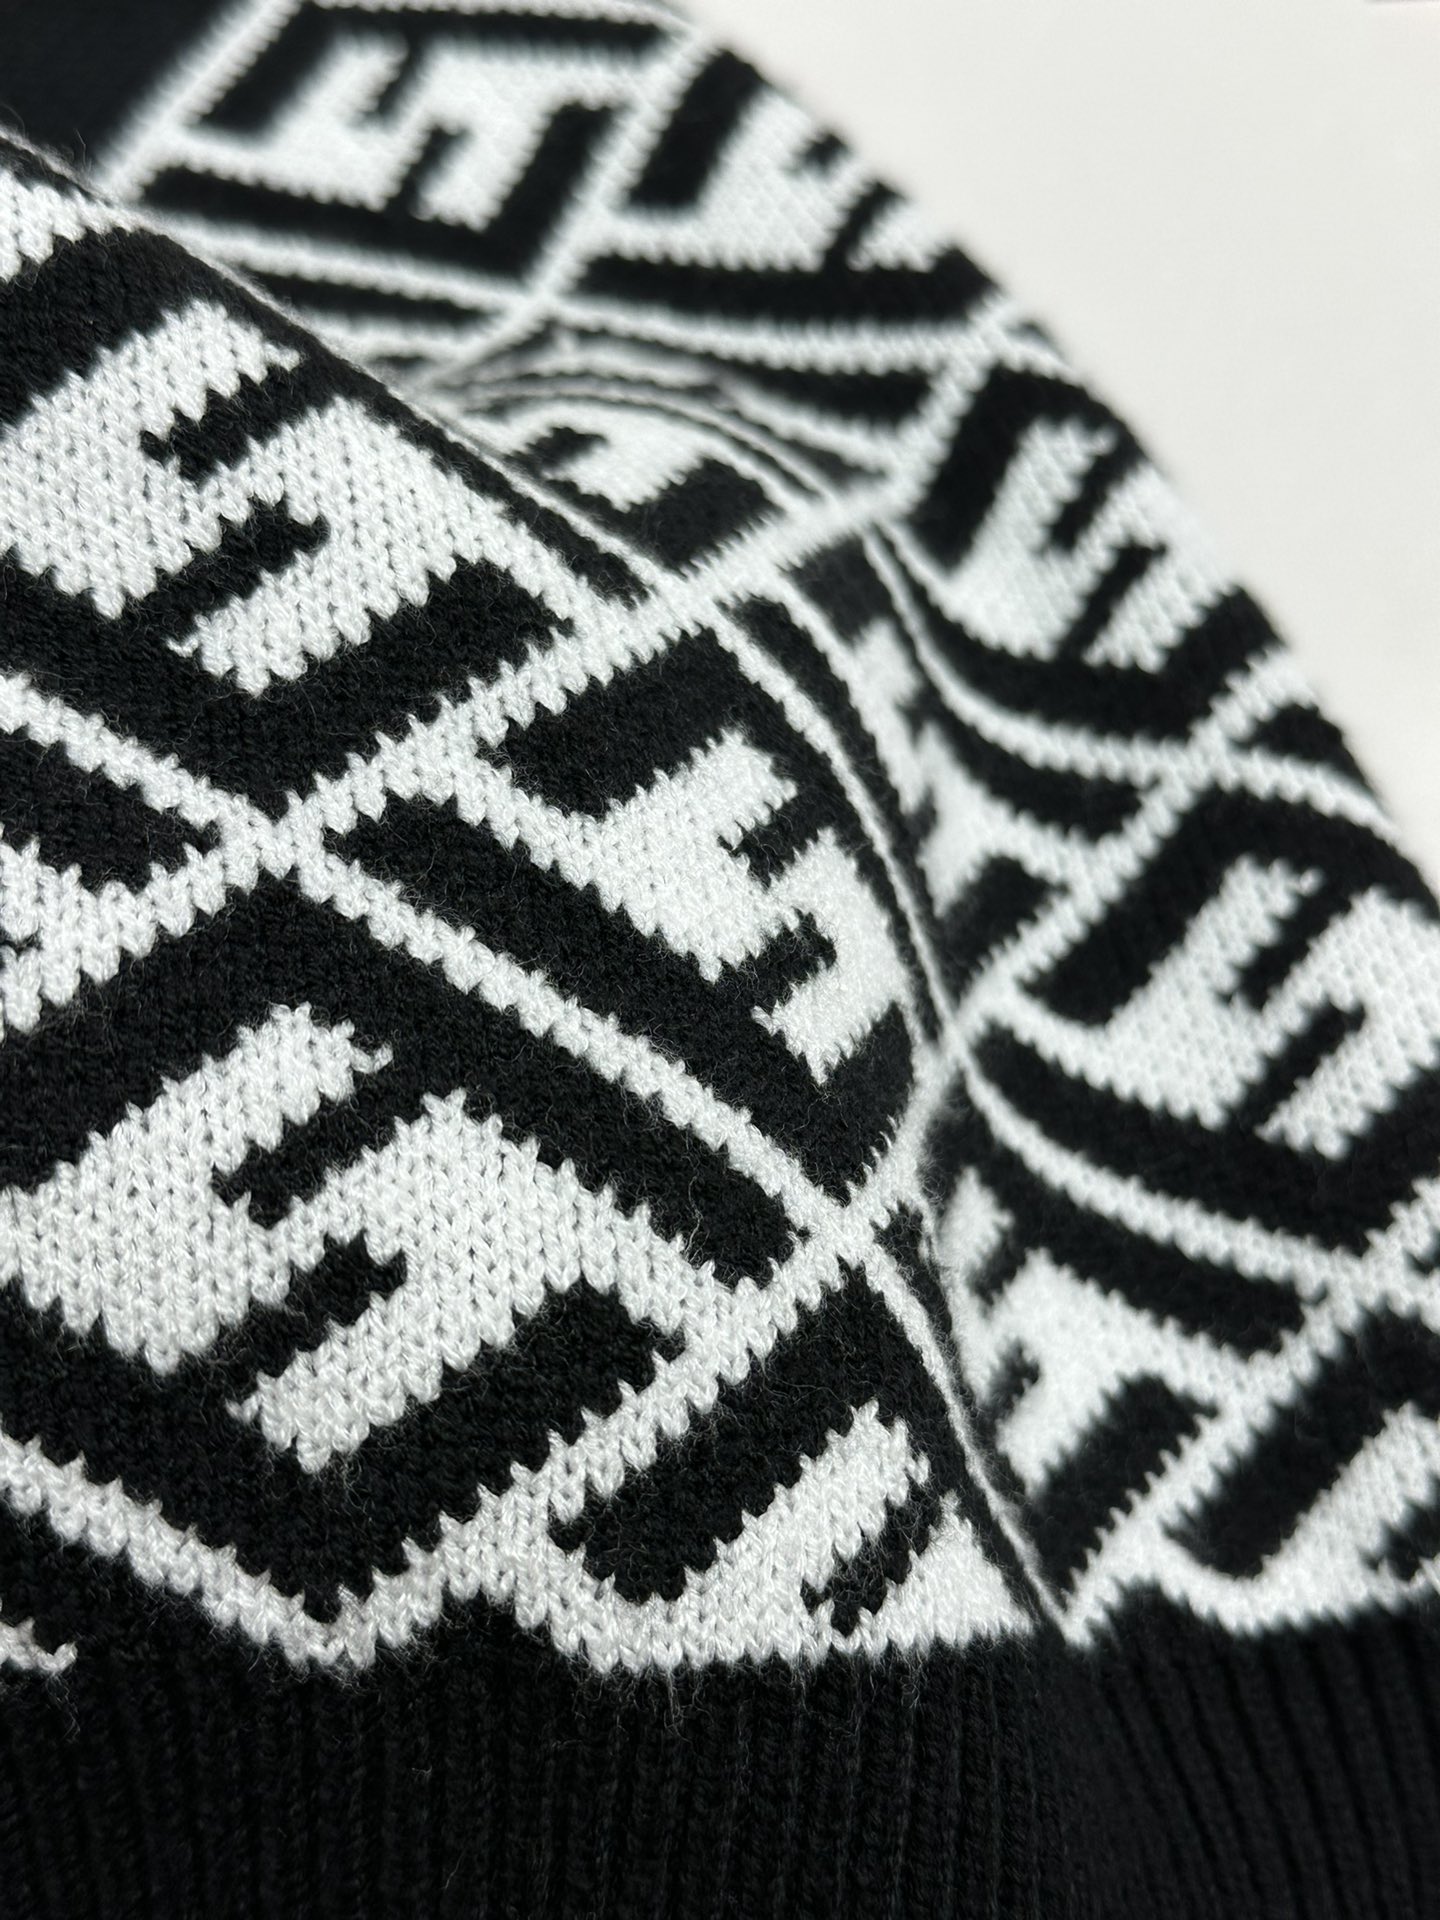 FEND1*秋冬新款针织毛衣高端品质专柜版本潮人最爱风格系列撞色拼接设计LOGO图案标志精选优质羊毛混纺